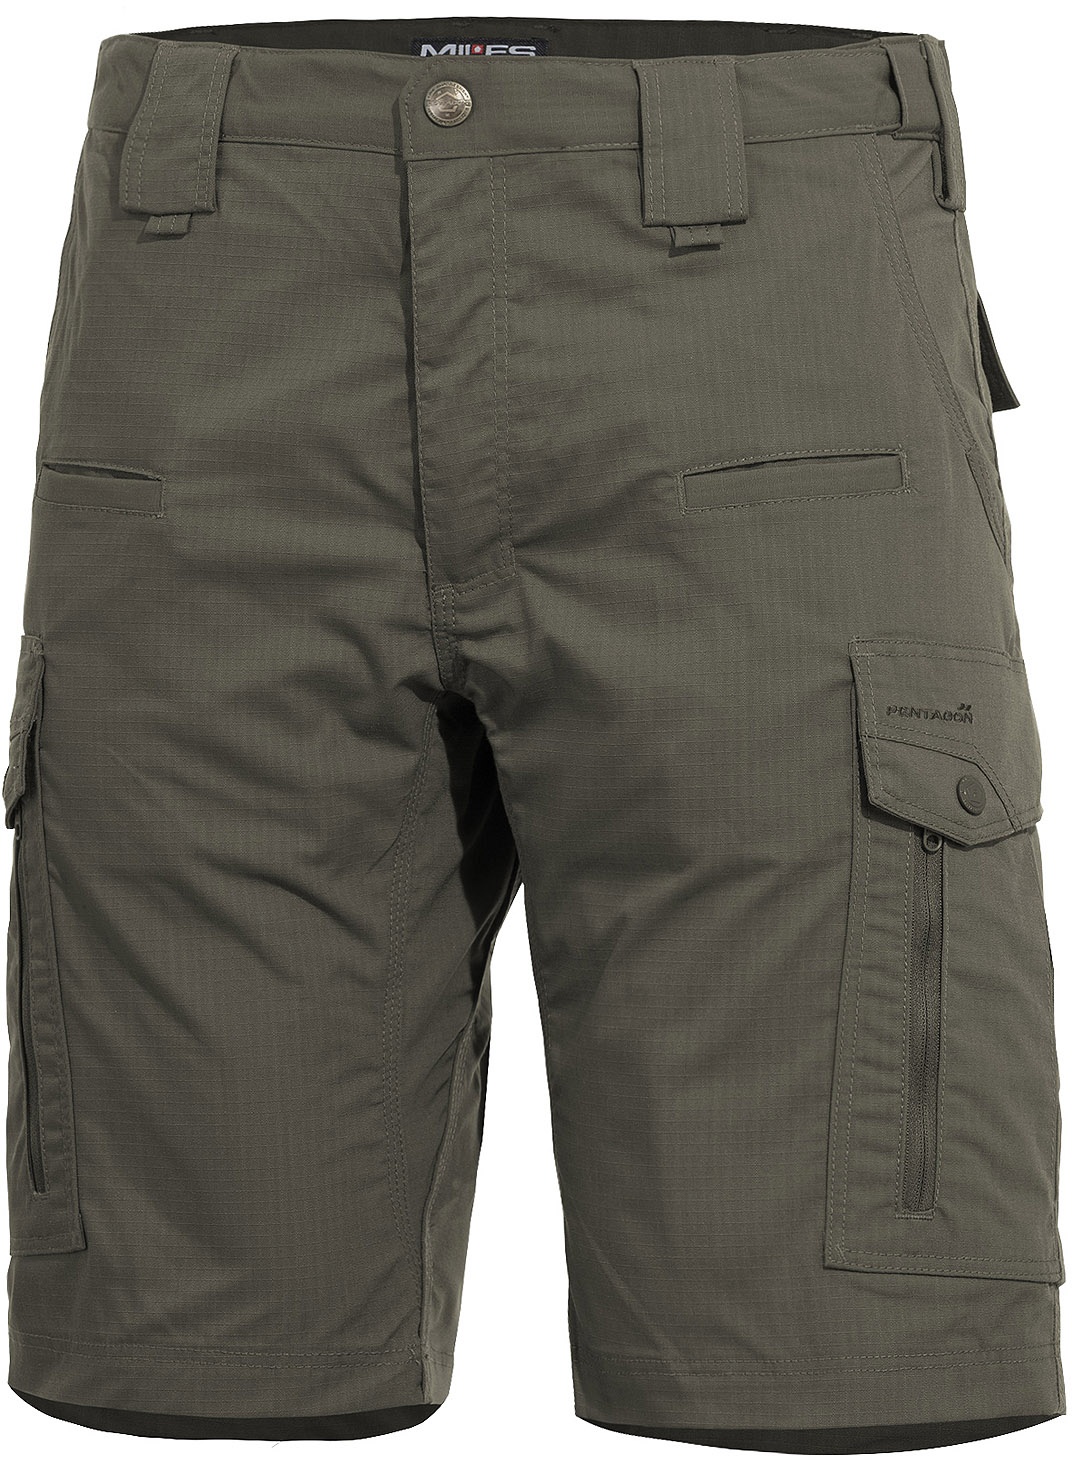 Pentagon Ranger Shorts 2.0 ranger green, Größe 34